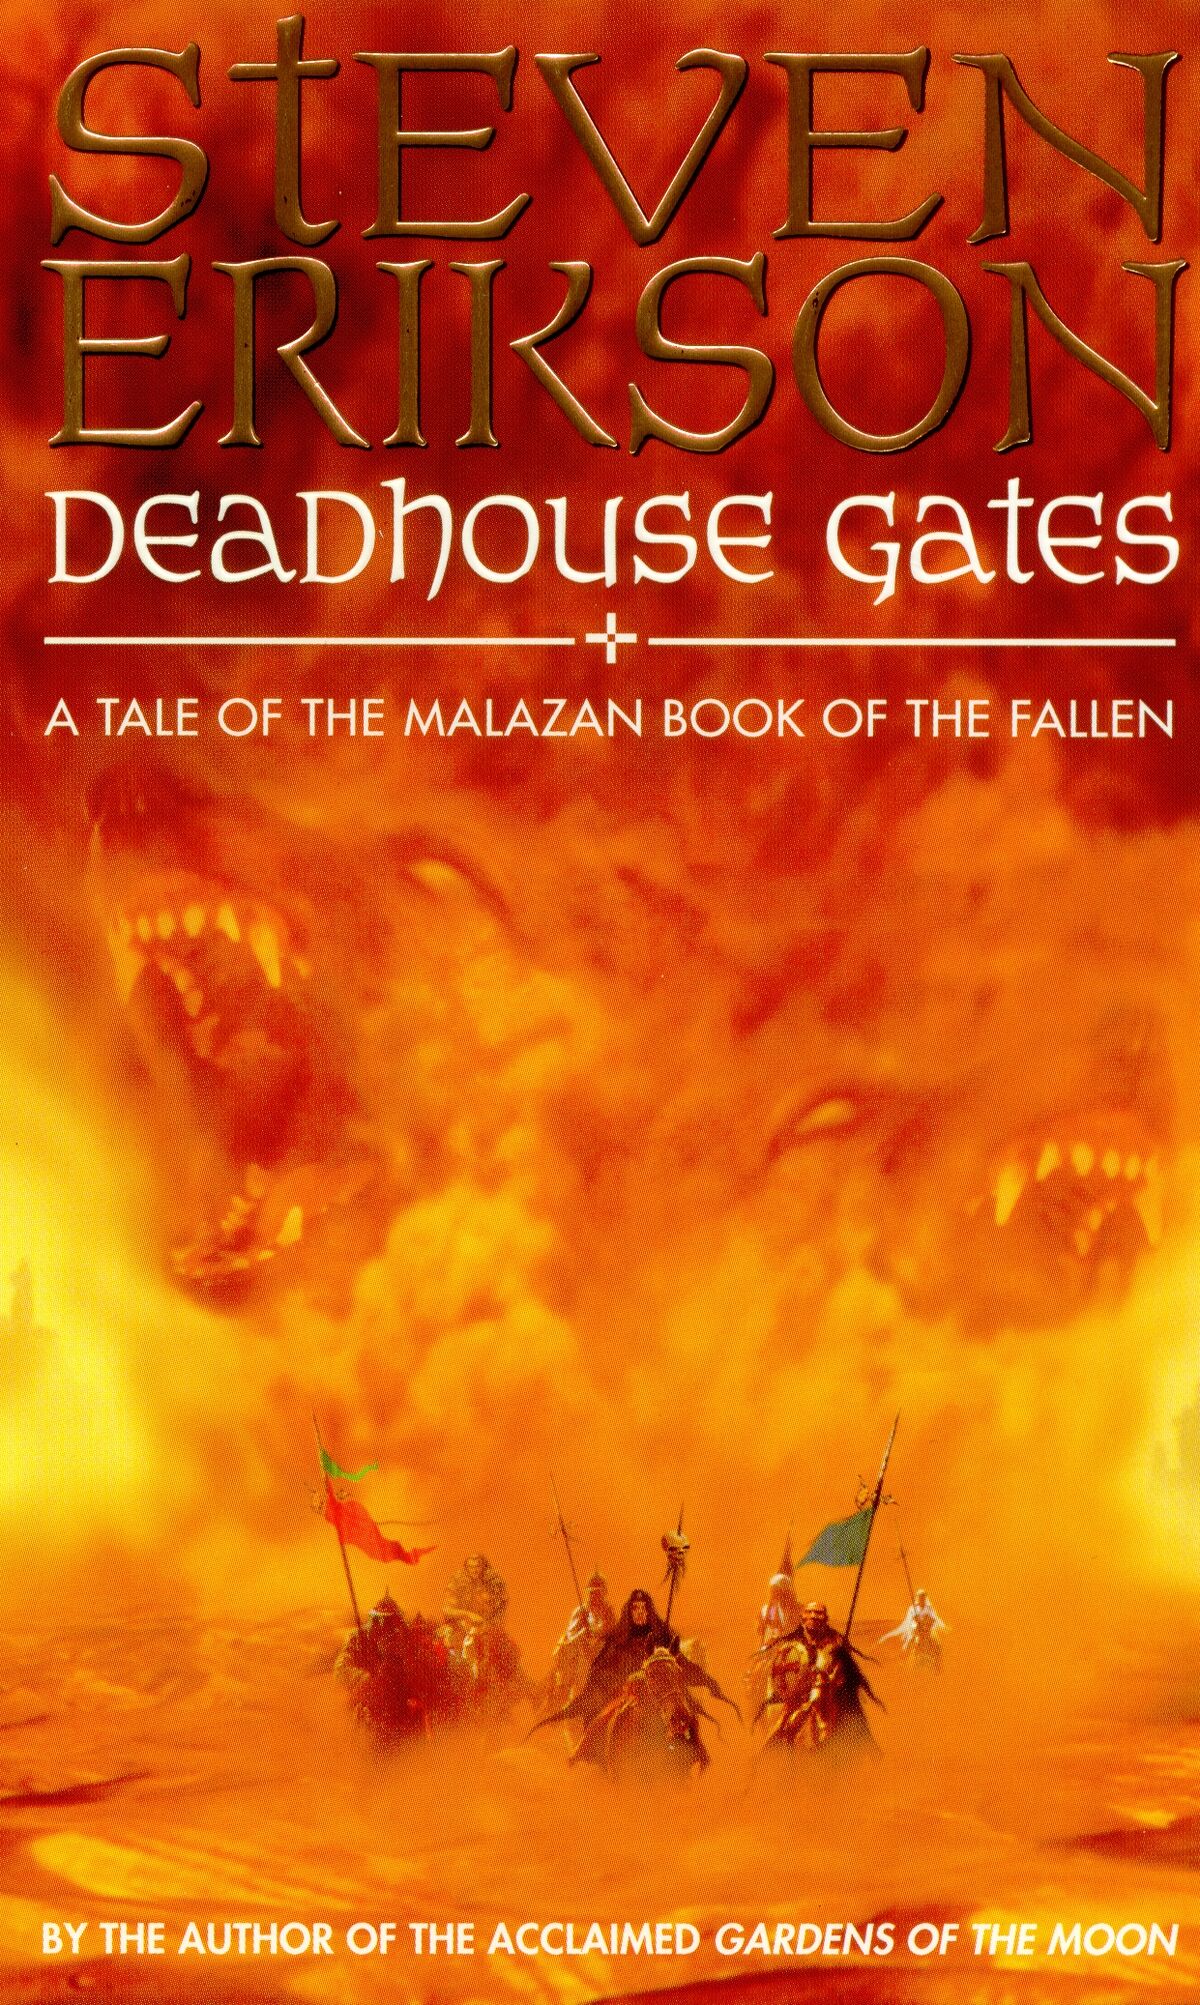 Malazan Book of the Fallen - Wikipedia